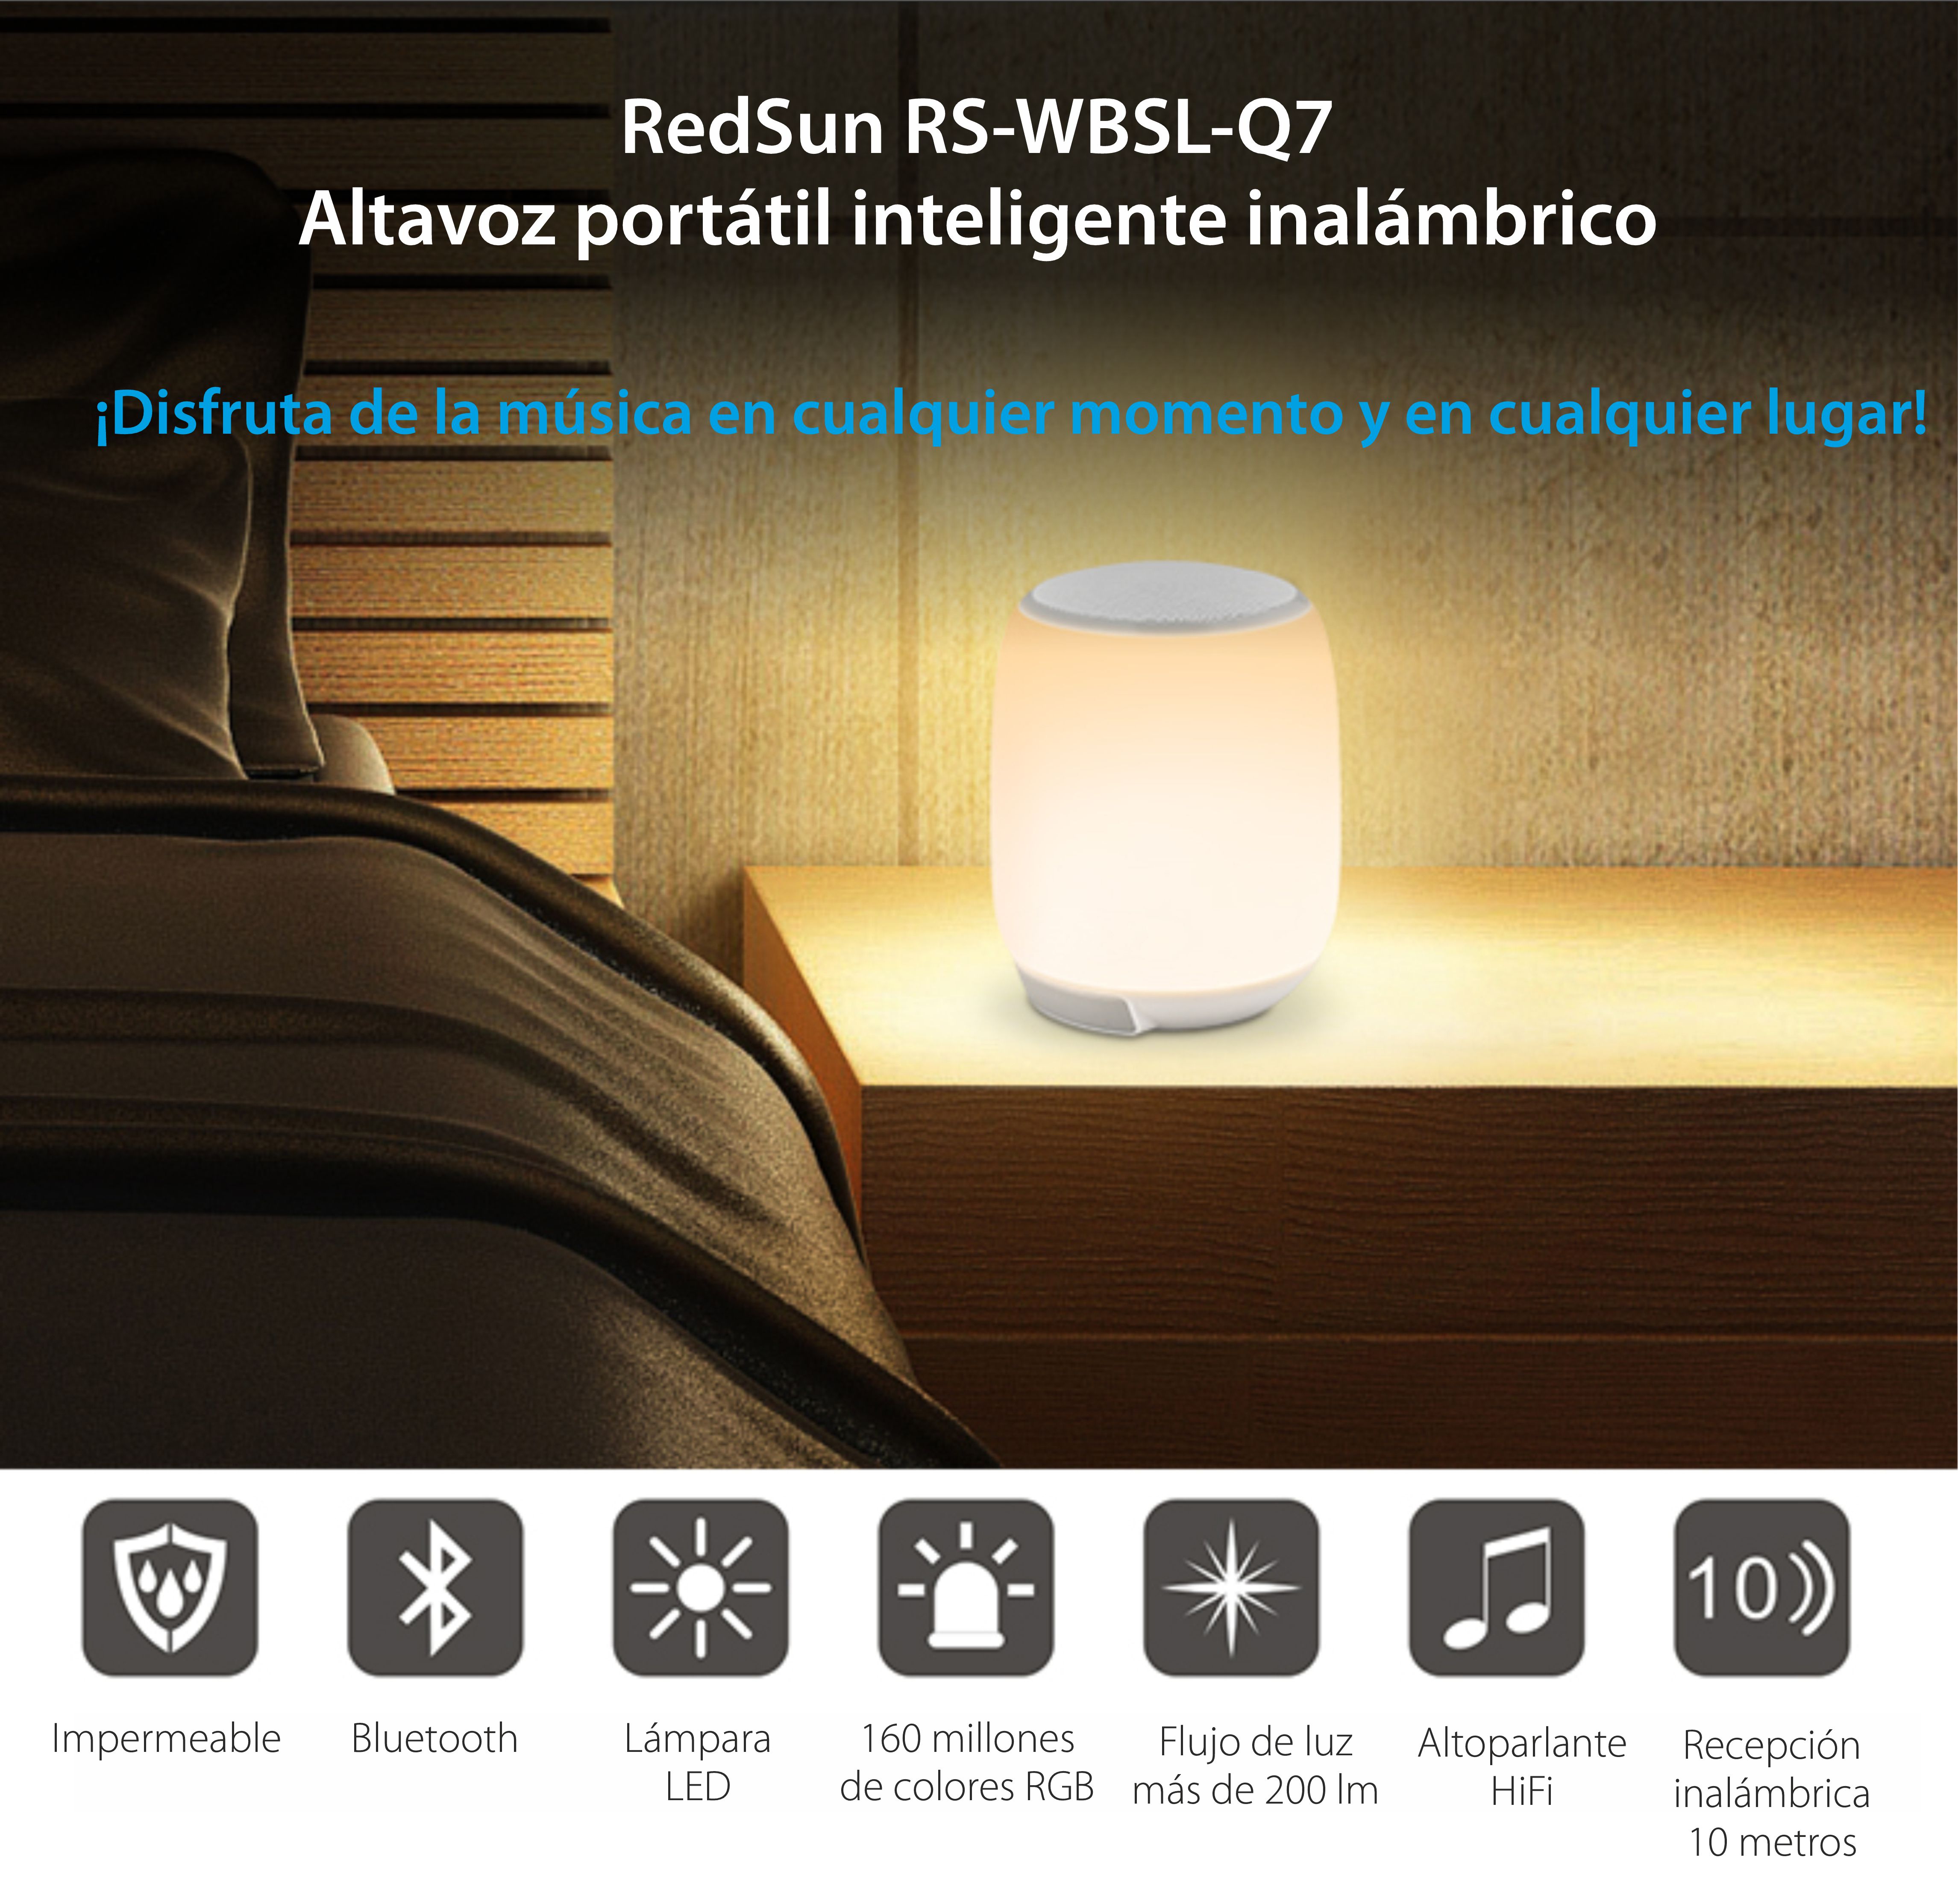 Altavoz y lámpara inteligentes, portátiles, bluetooth Redsun RS-WBSL-Q7